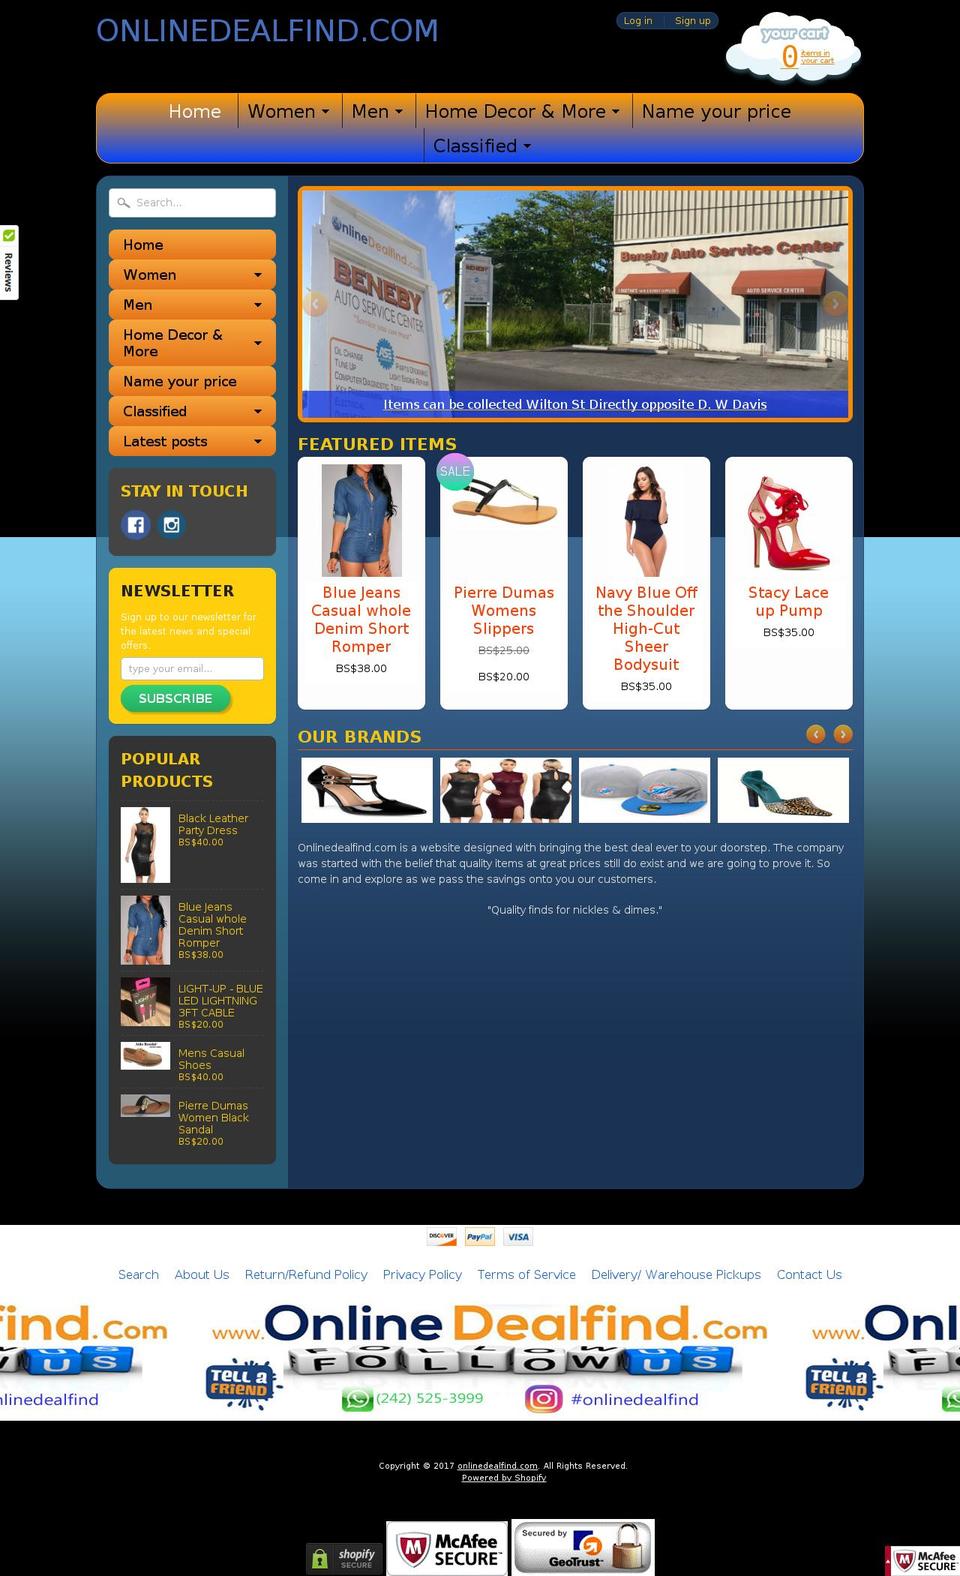 onlinedealfind.com shopify website screenshot